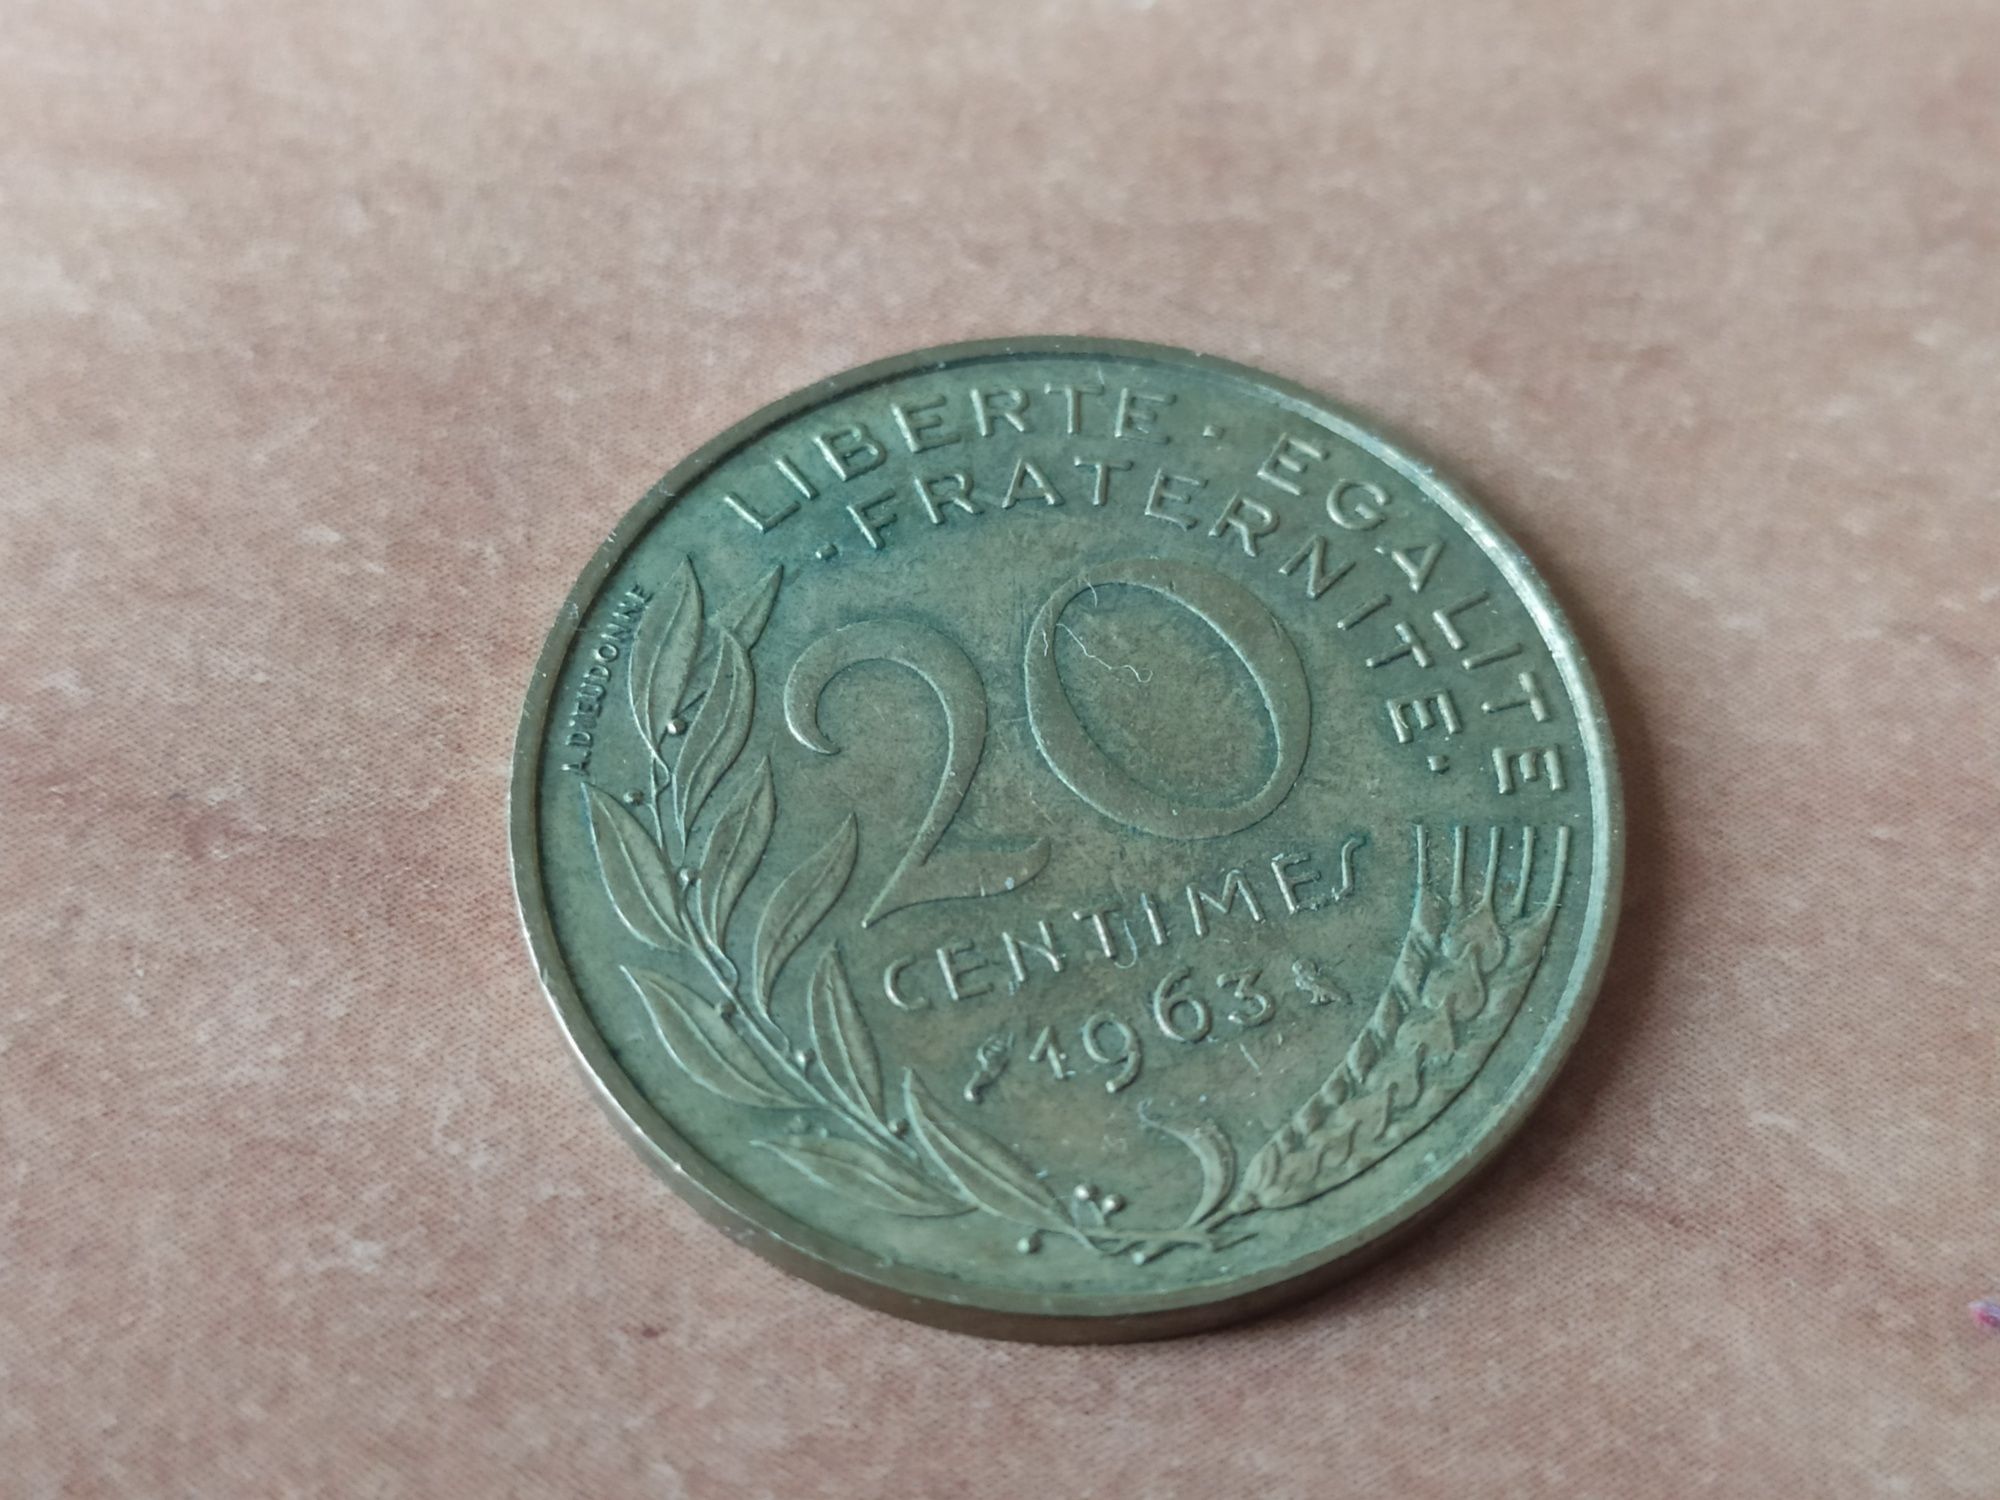 20 centimes Francja 1963 r. awers i rewers skręcone o 180 stopni